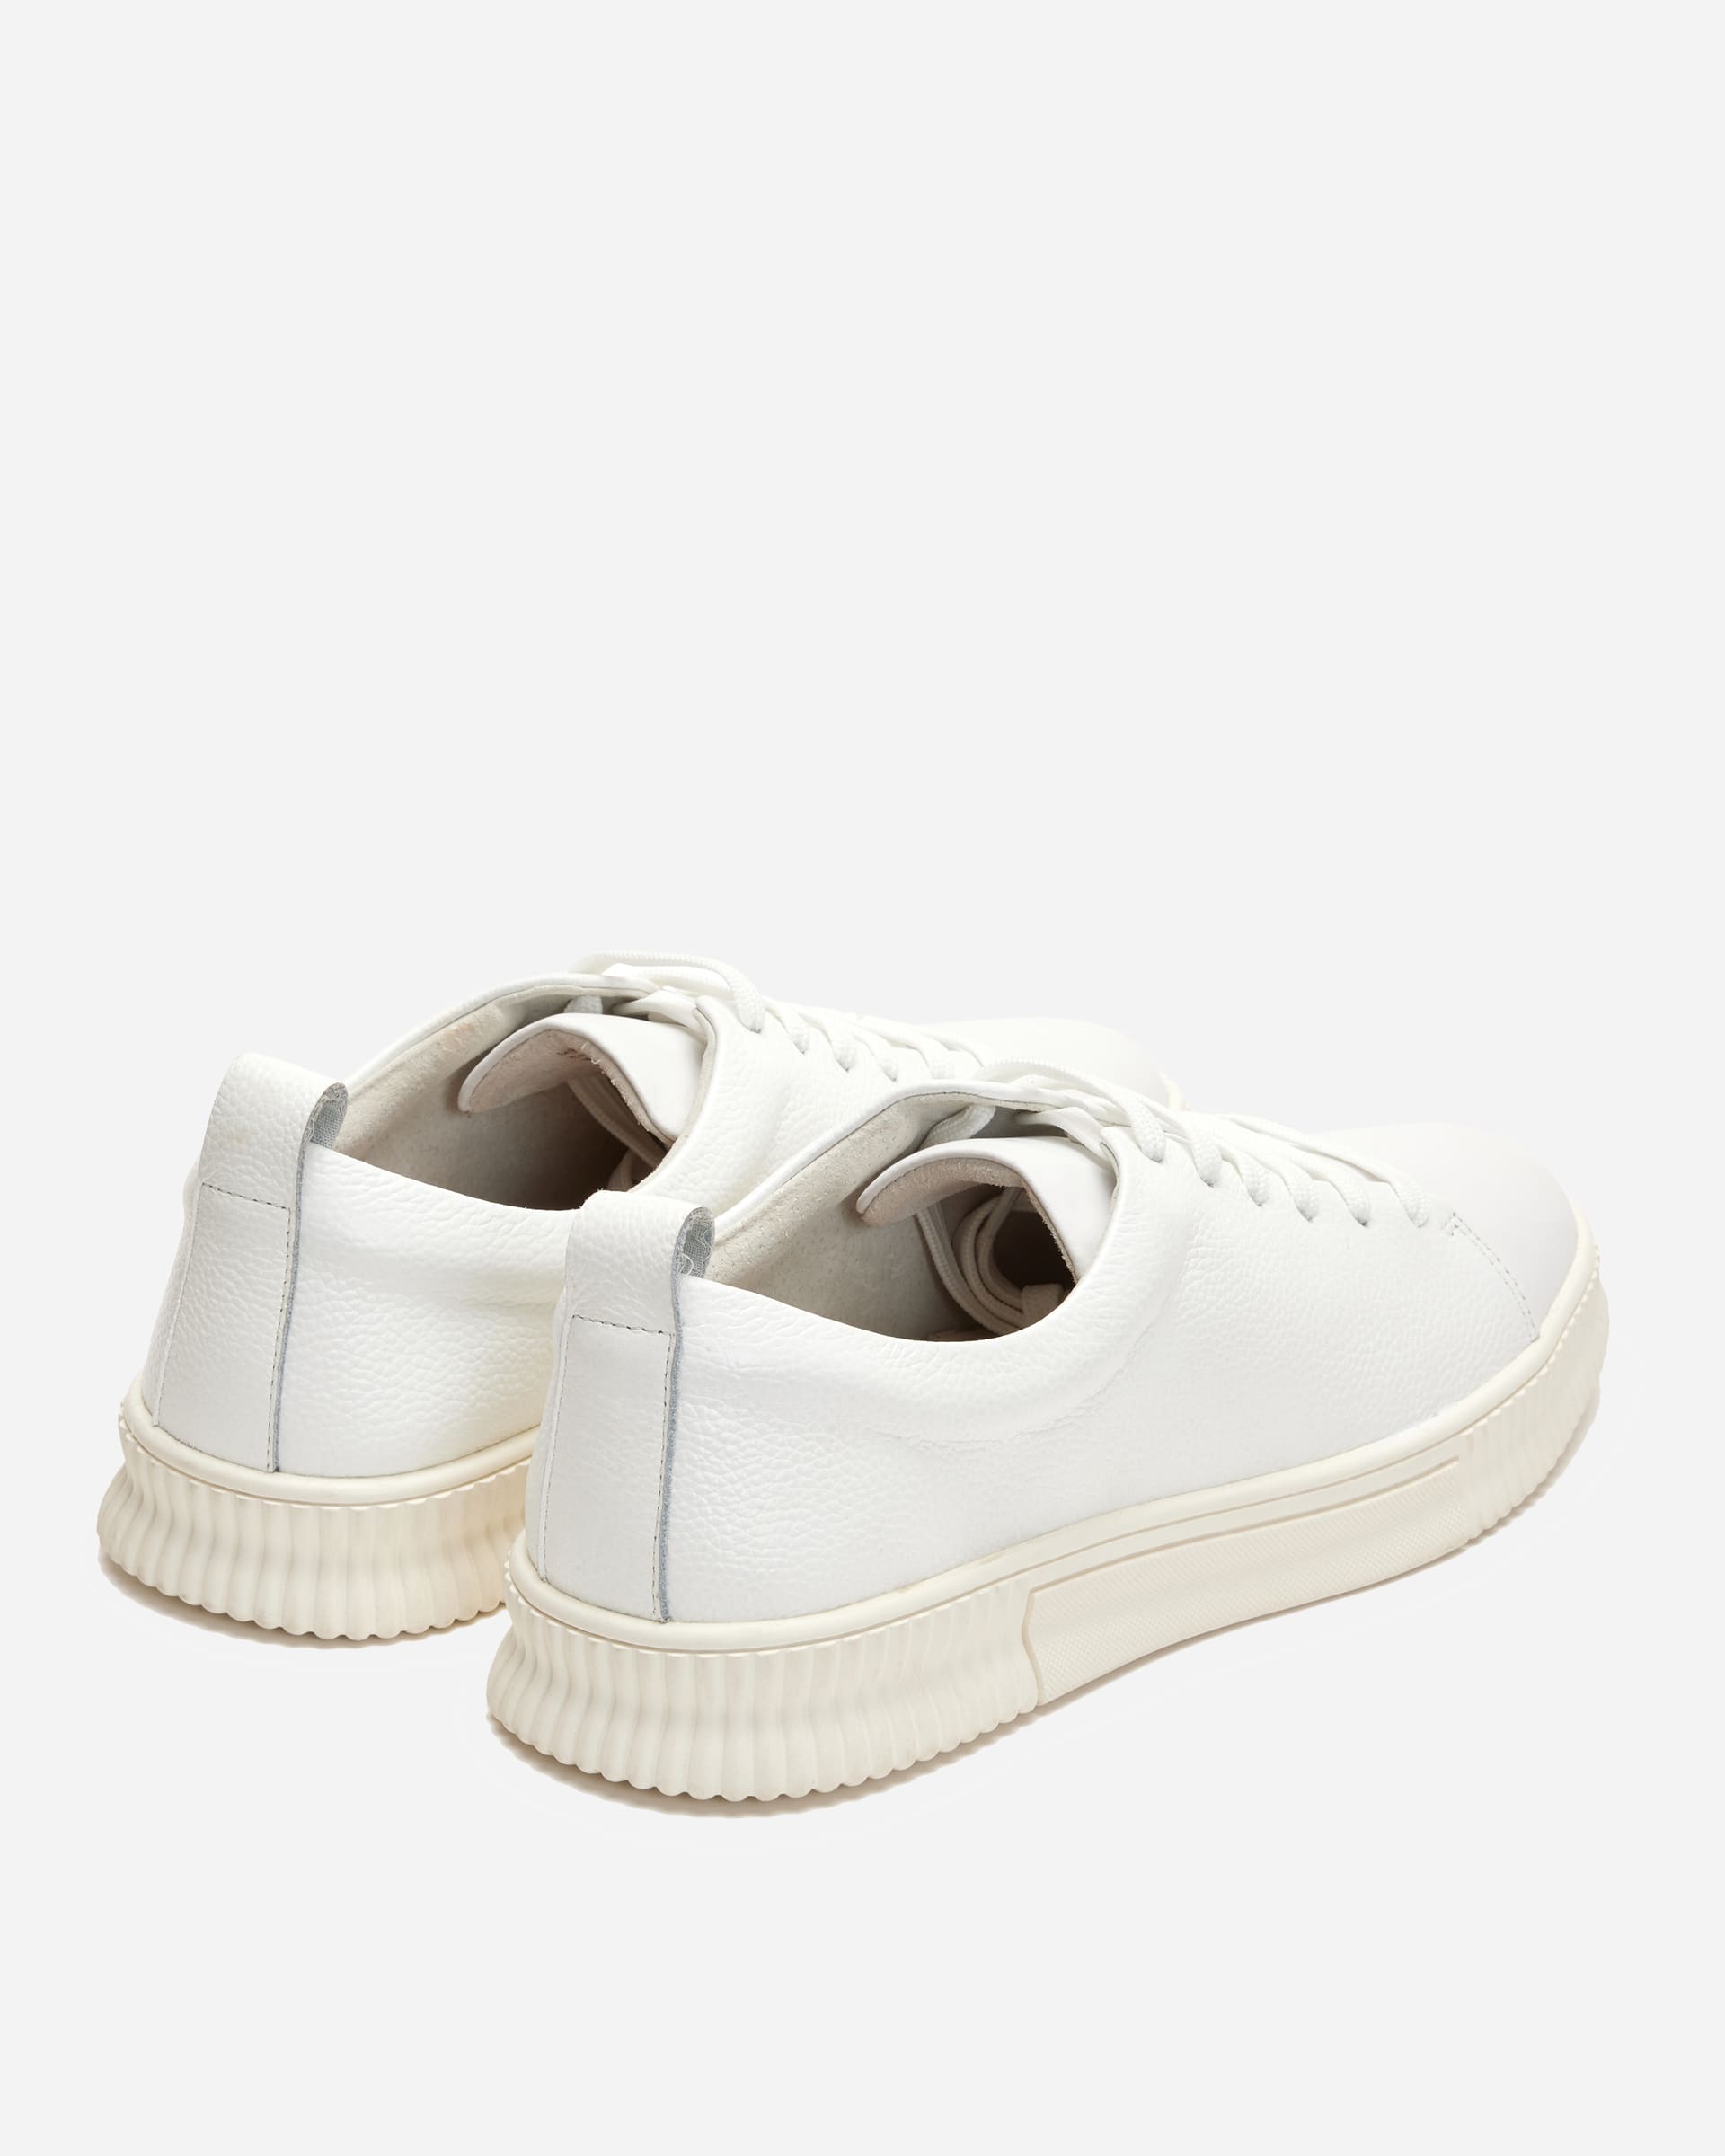 Pebble White Sneaker - Men's Shoes at Menzclub